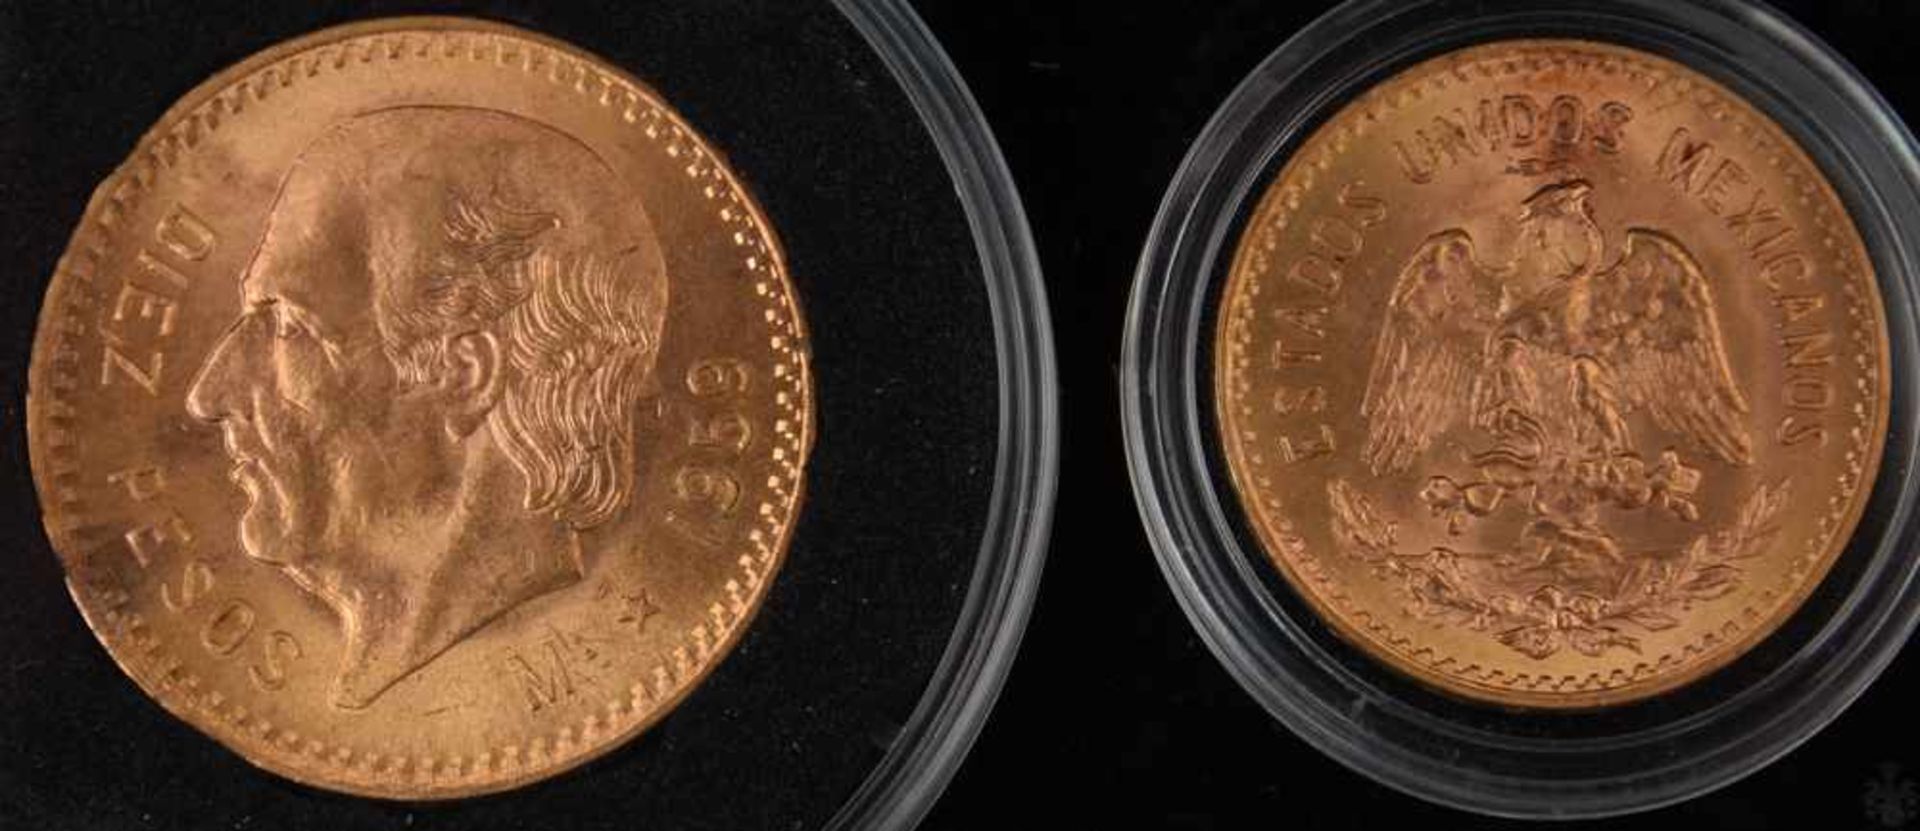 GOLDMÜNZEN, Konvolut Mexico Pesos Gold, 20. Jhd. (11)7 Münzen Mexico1 x 50 Pesos Centenario 41,667 - Bild 4 aus 9